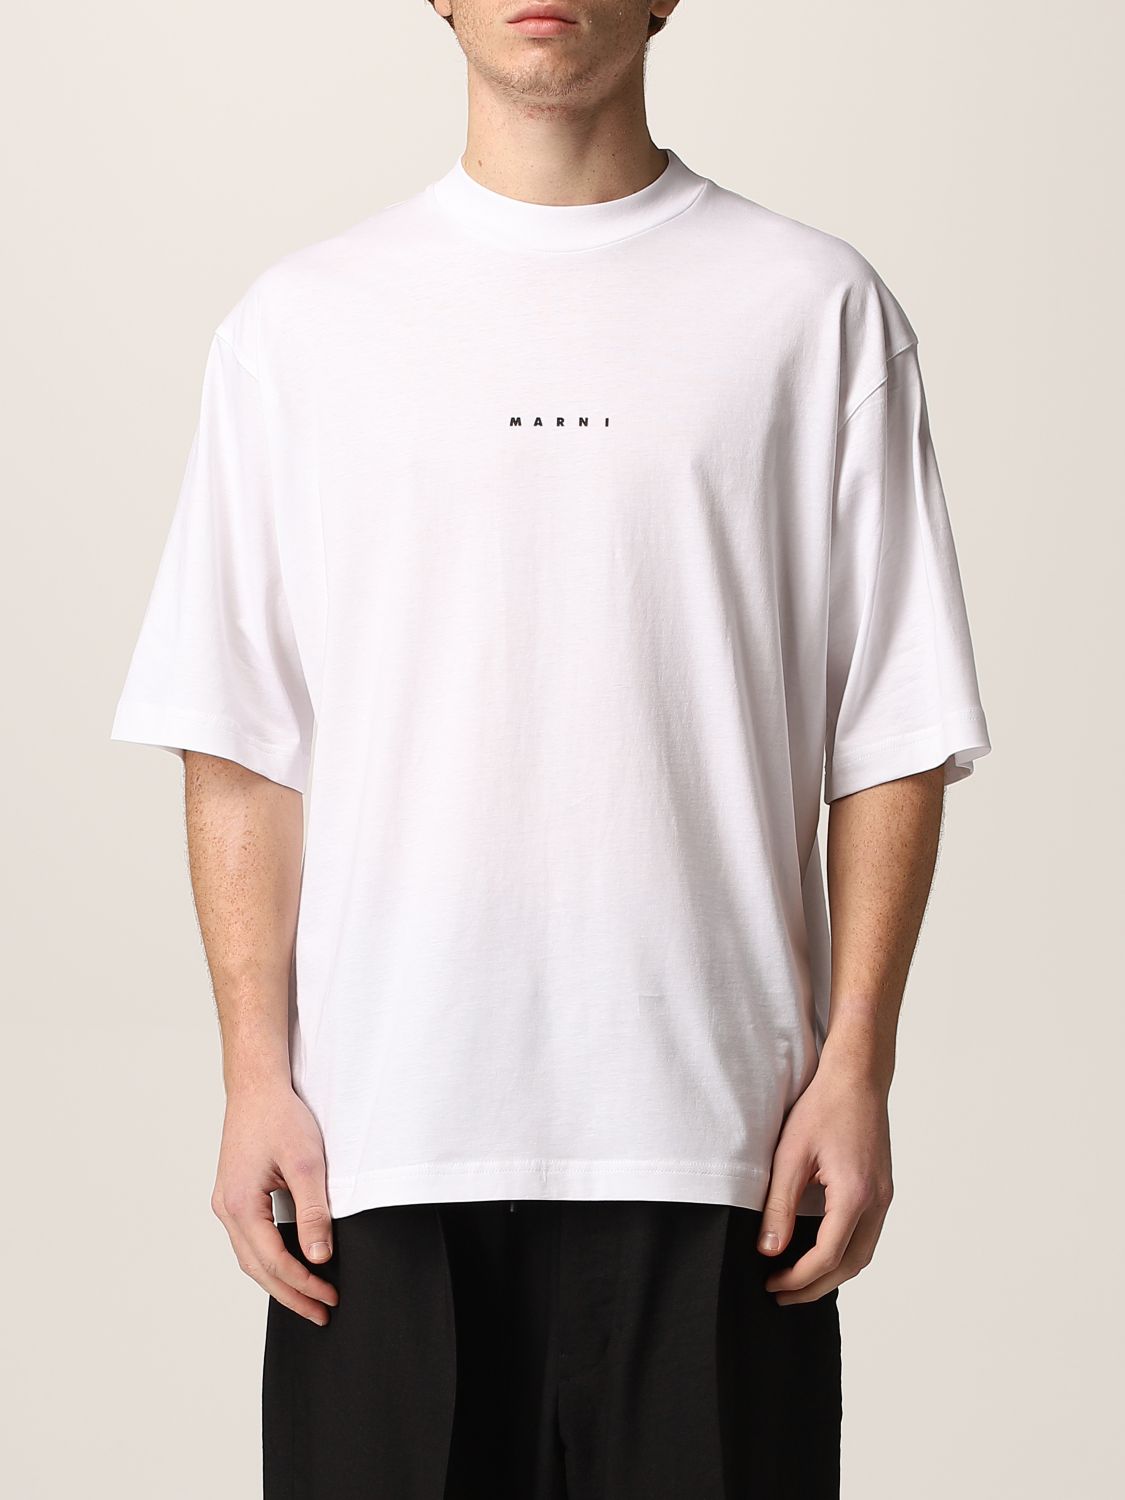 Marni Tシャツ メンズ ホワイト Tシャツ Marni Humu0223p1uscs87 Giglio Com